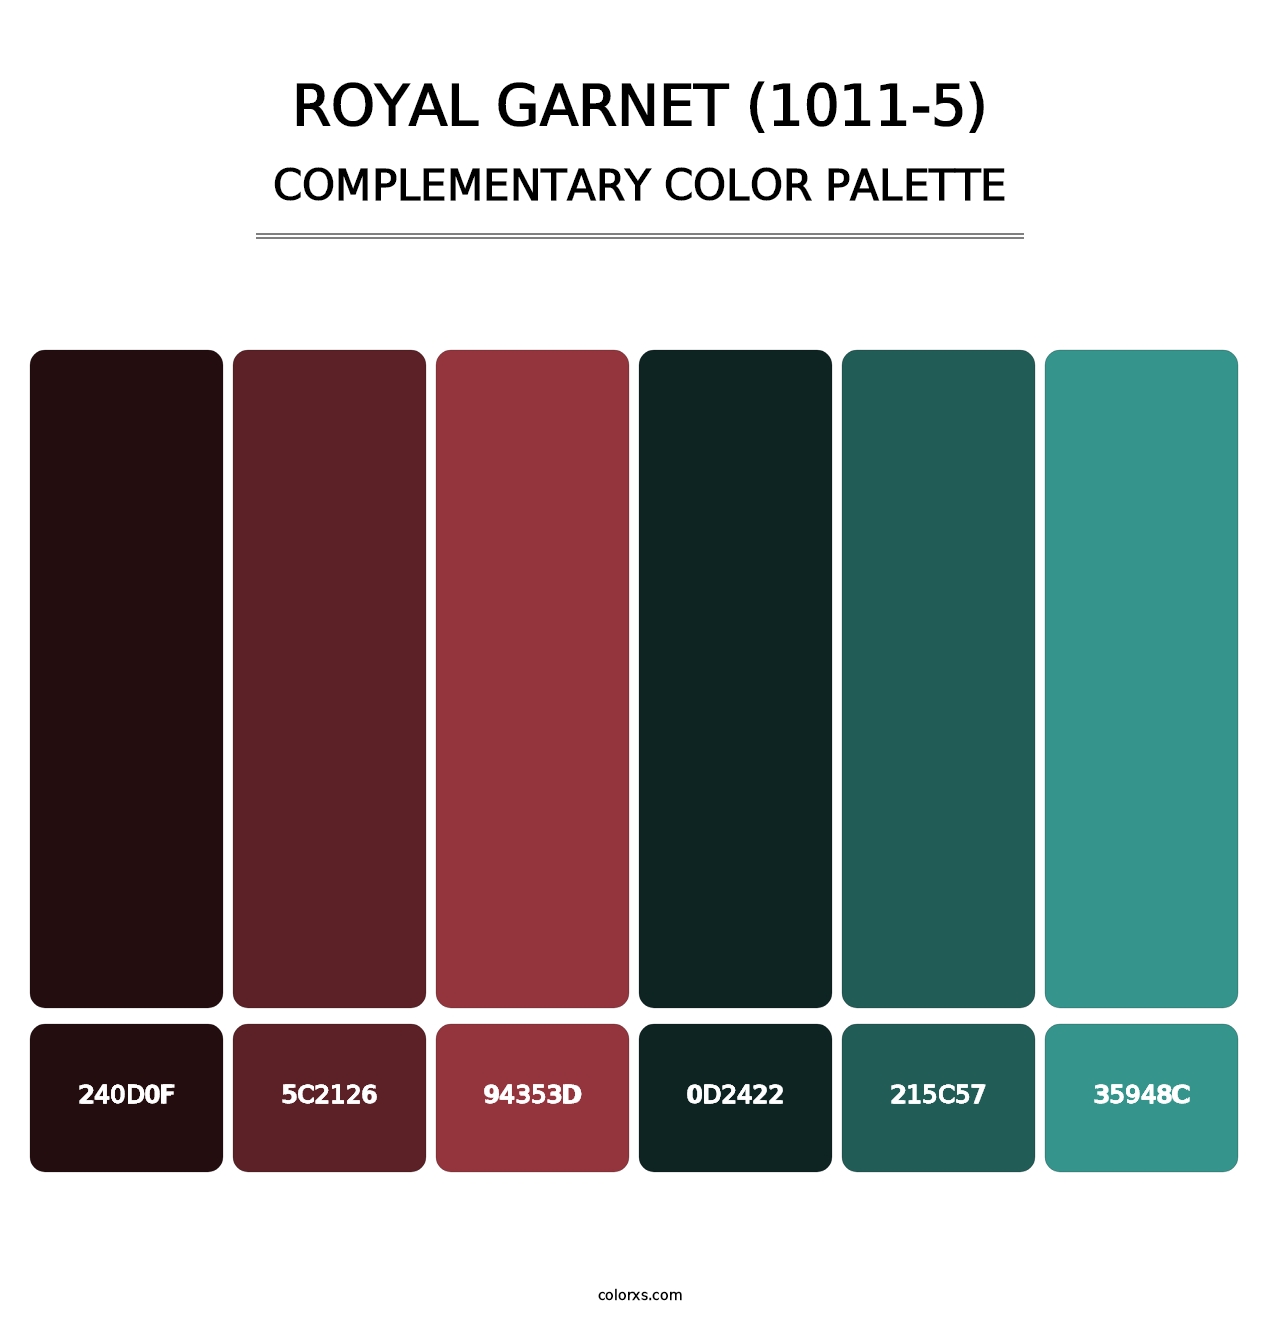 Royal Garnet (1011-5) - Complementary Color Palette